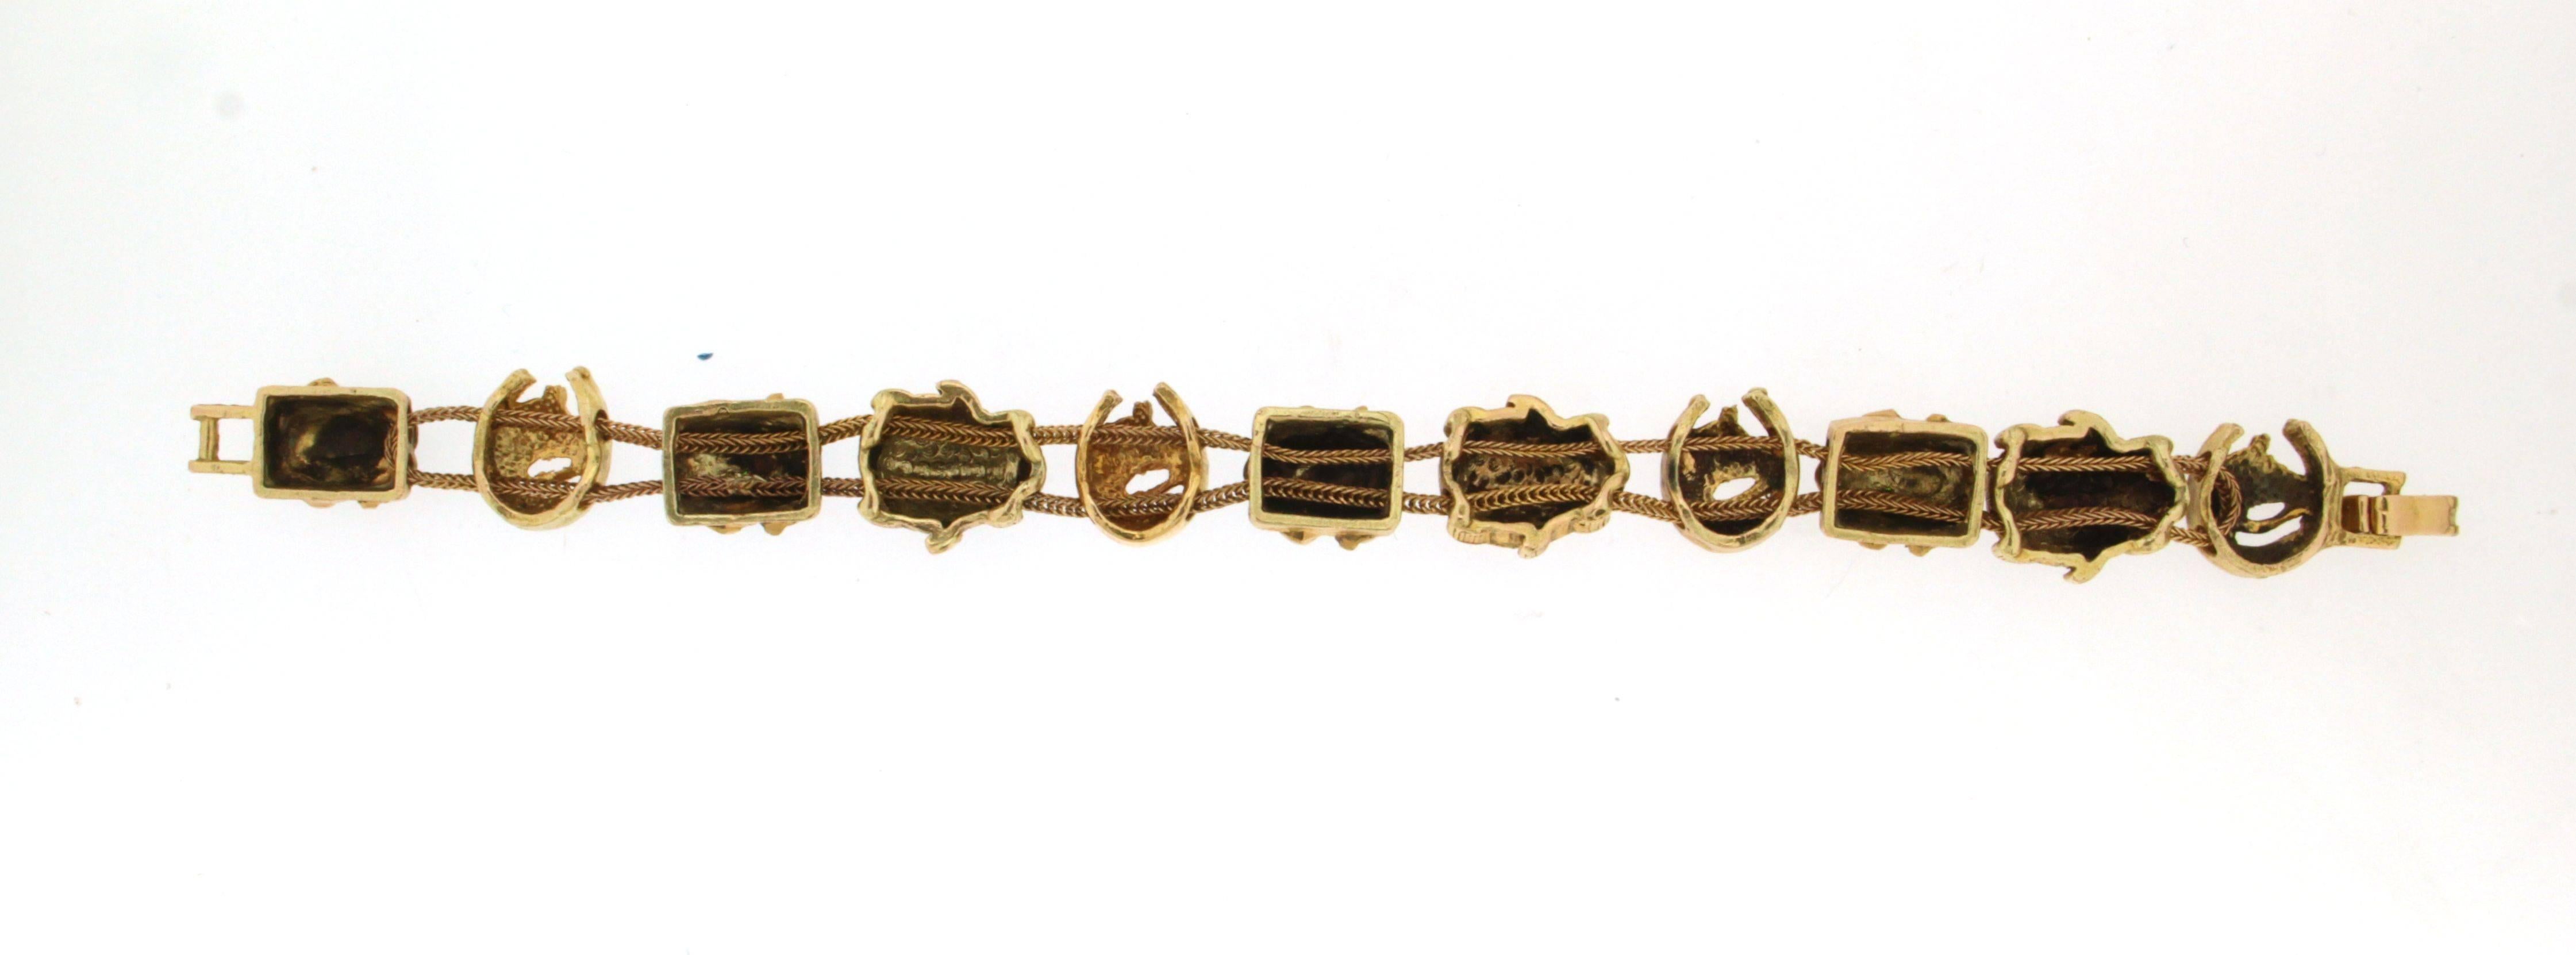 Yellow gold 14 karat ladybrugs and frogs cuff bracelet

Bracelet weight 39 grams
